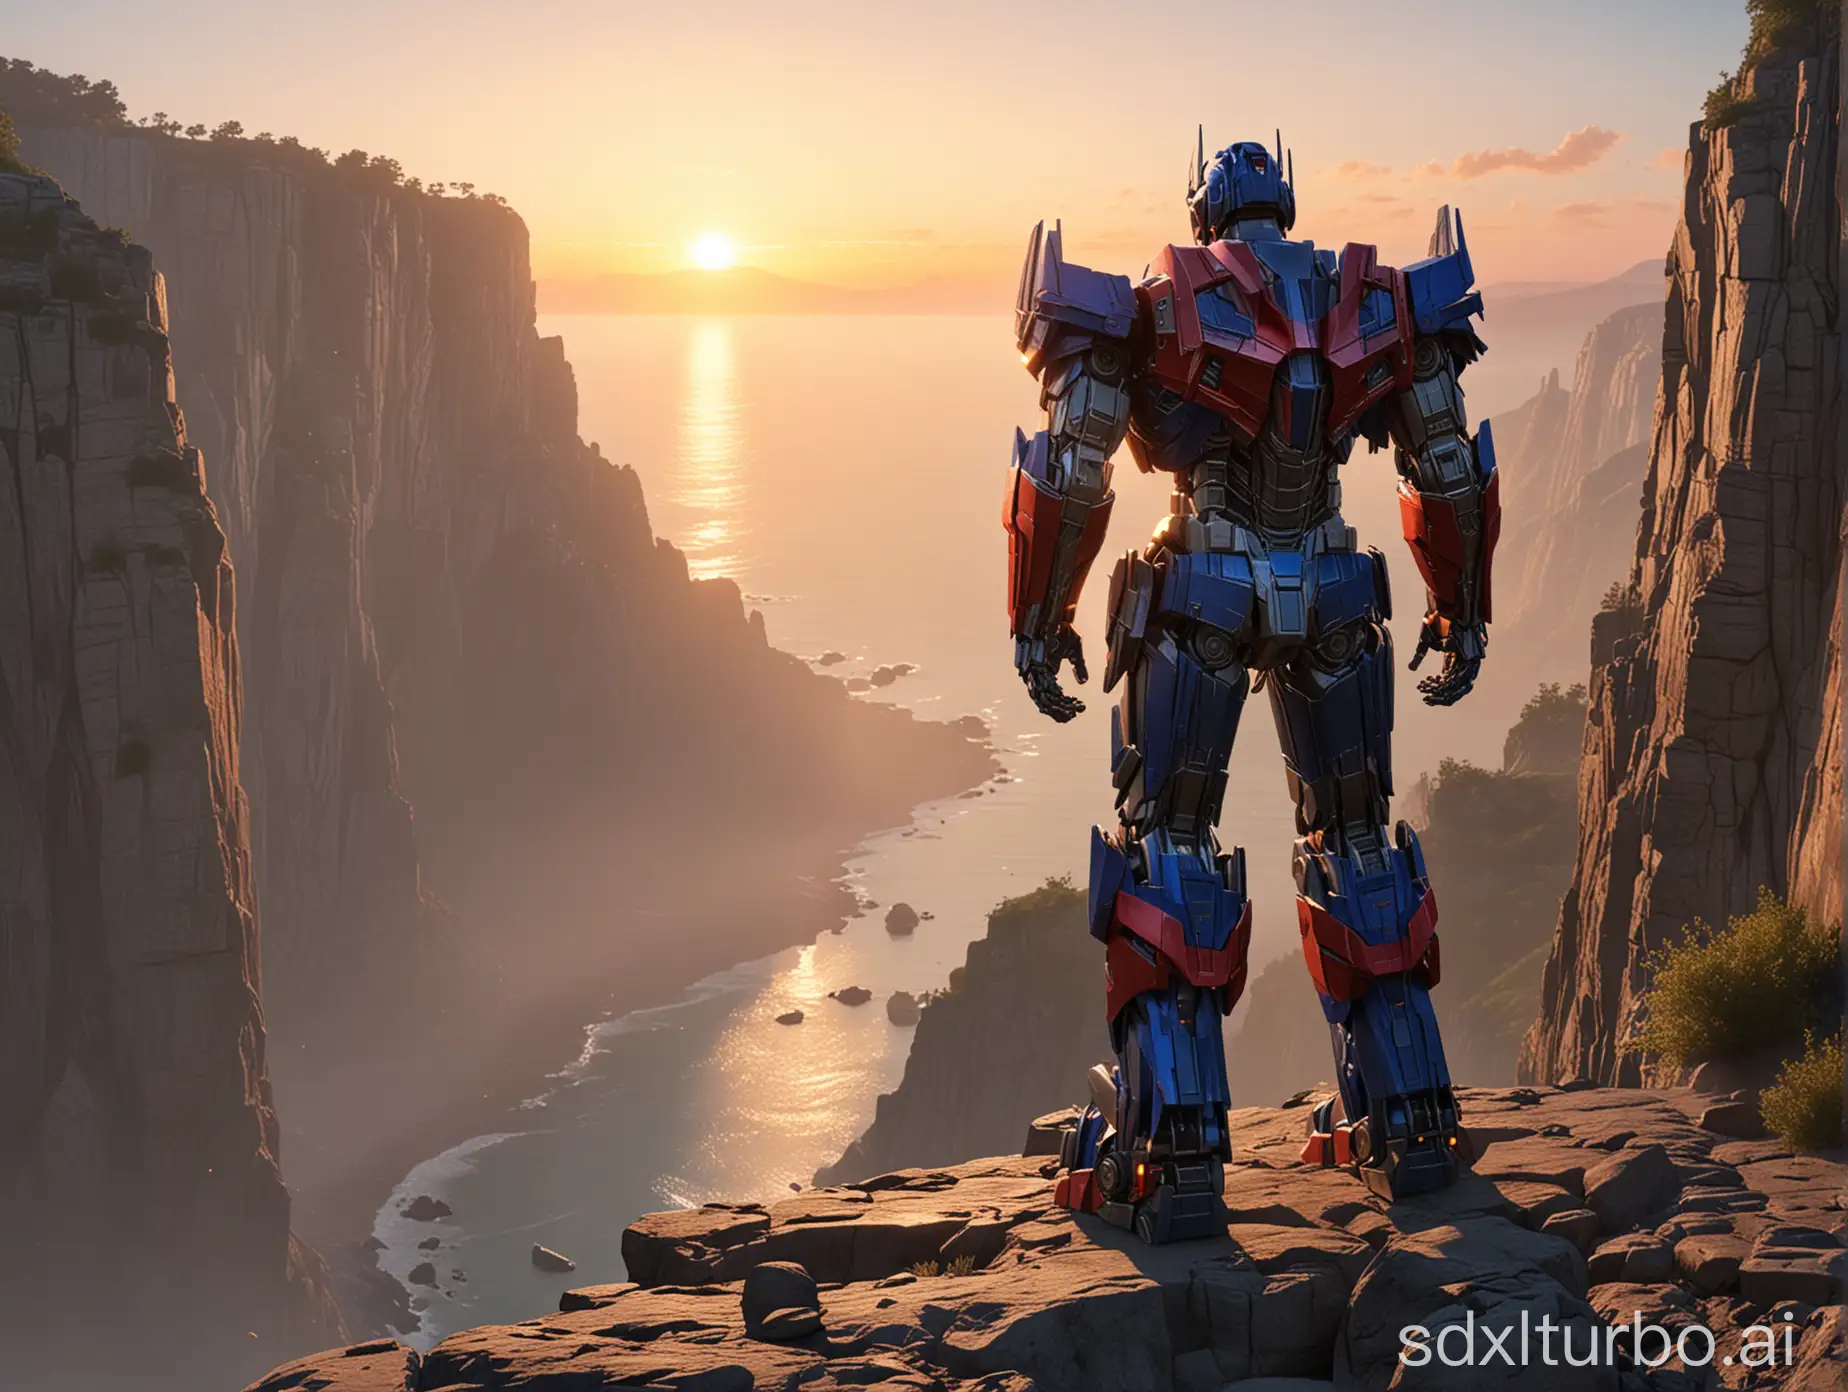 Optimus-Prime-Contemplates-Sunrise-on-Cliff-Edge-Realistic-Transformers-Art